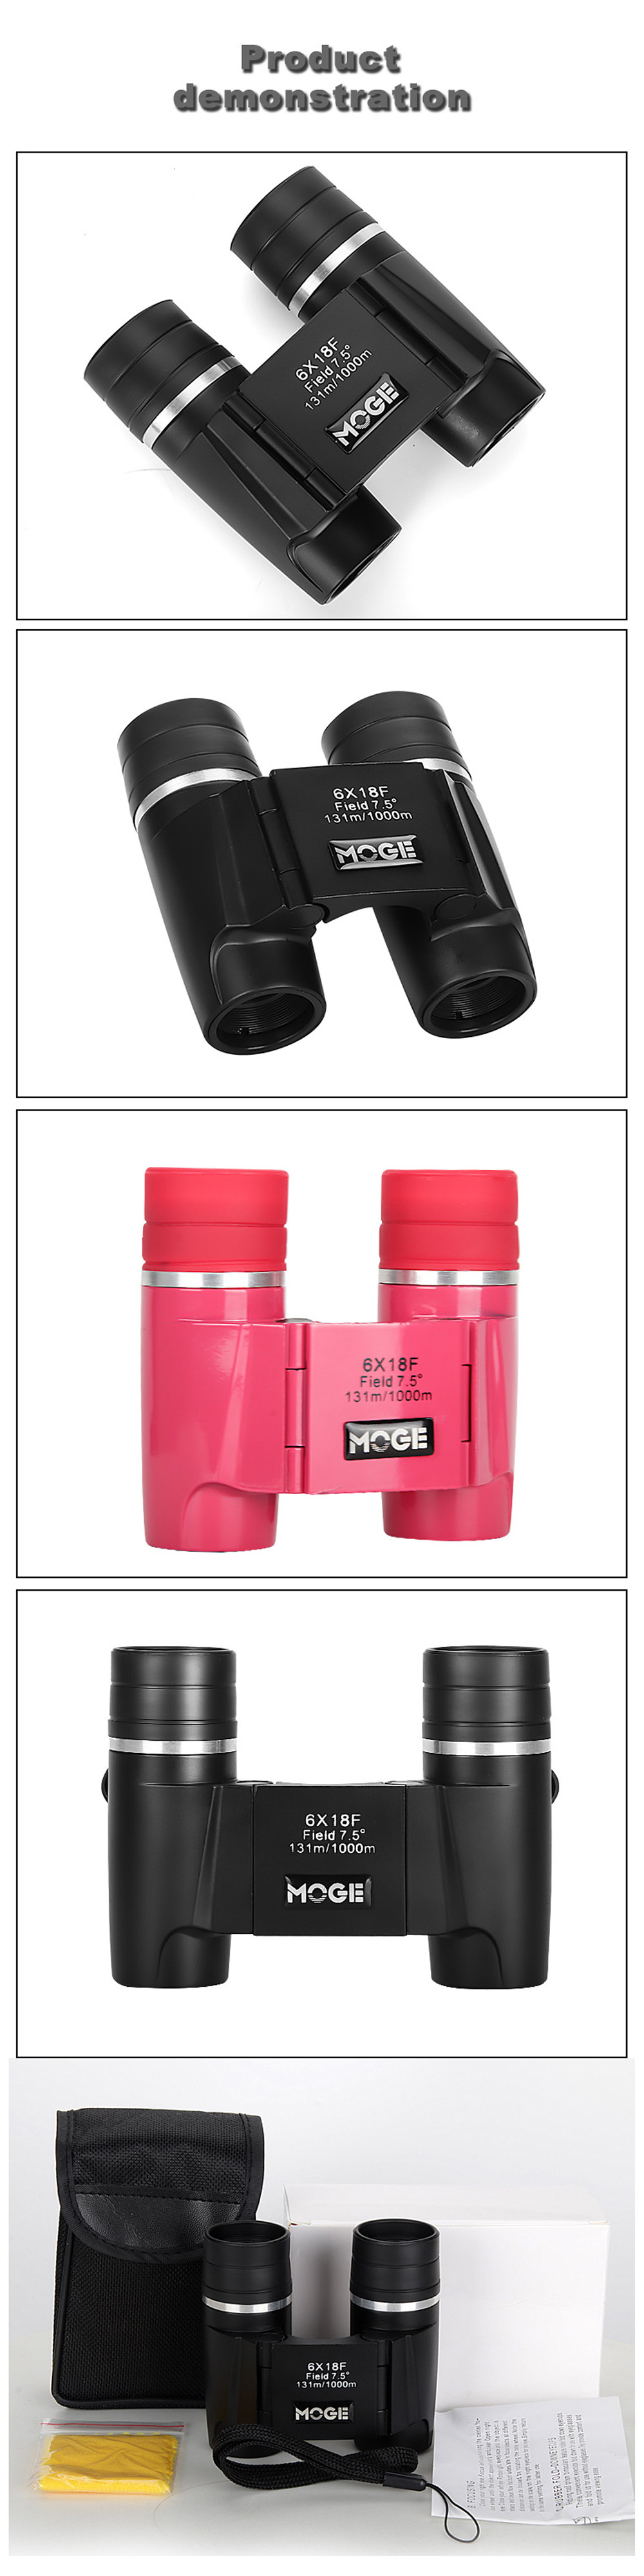 MOGE-6x18-Binoculars-Microscope-HD-Night-Vision-Professional-Binoculars-for-Outdoor-Camping-Travel-1891962-3